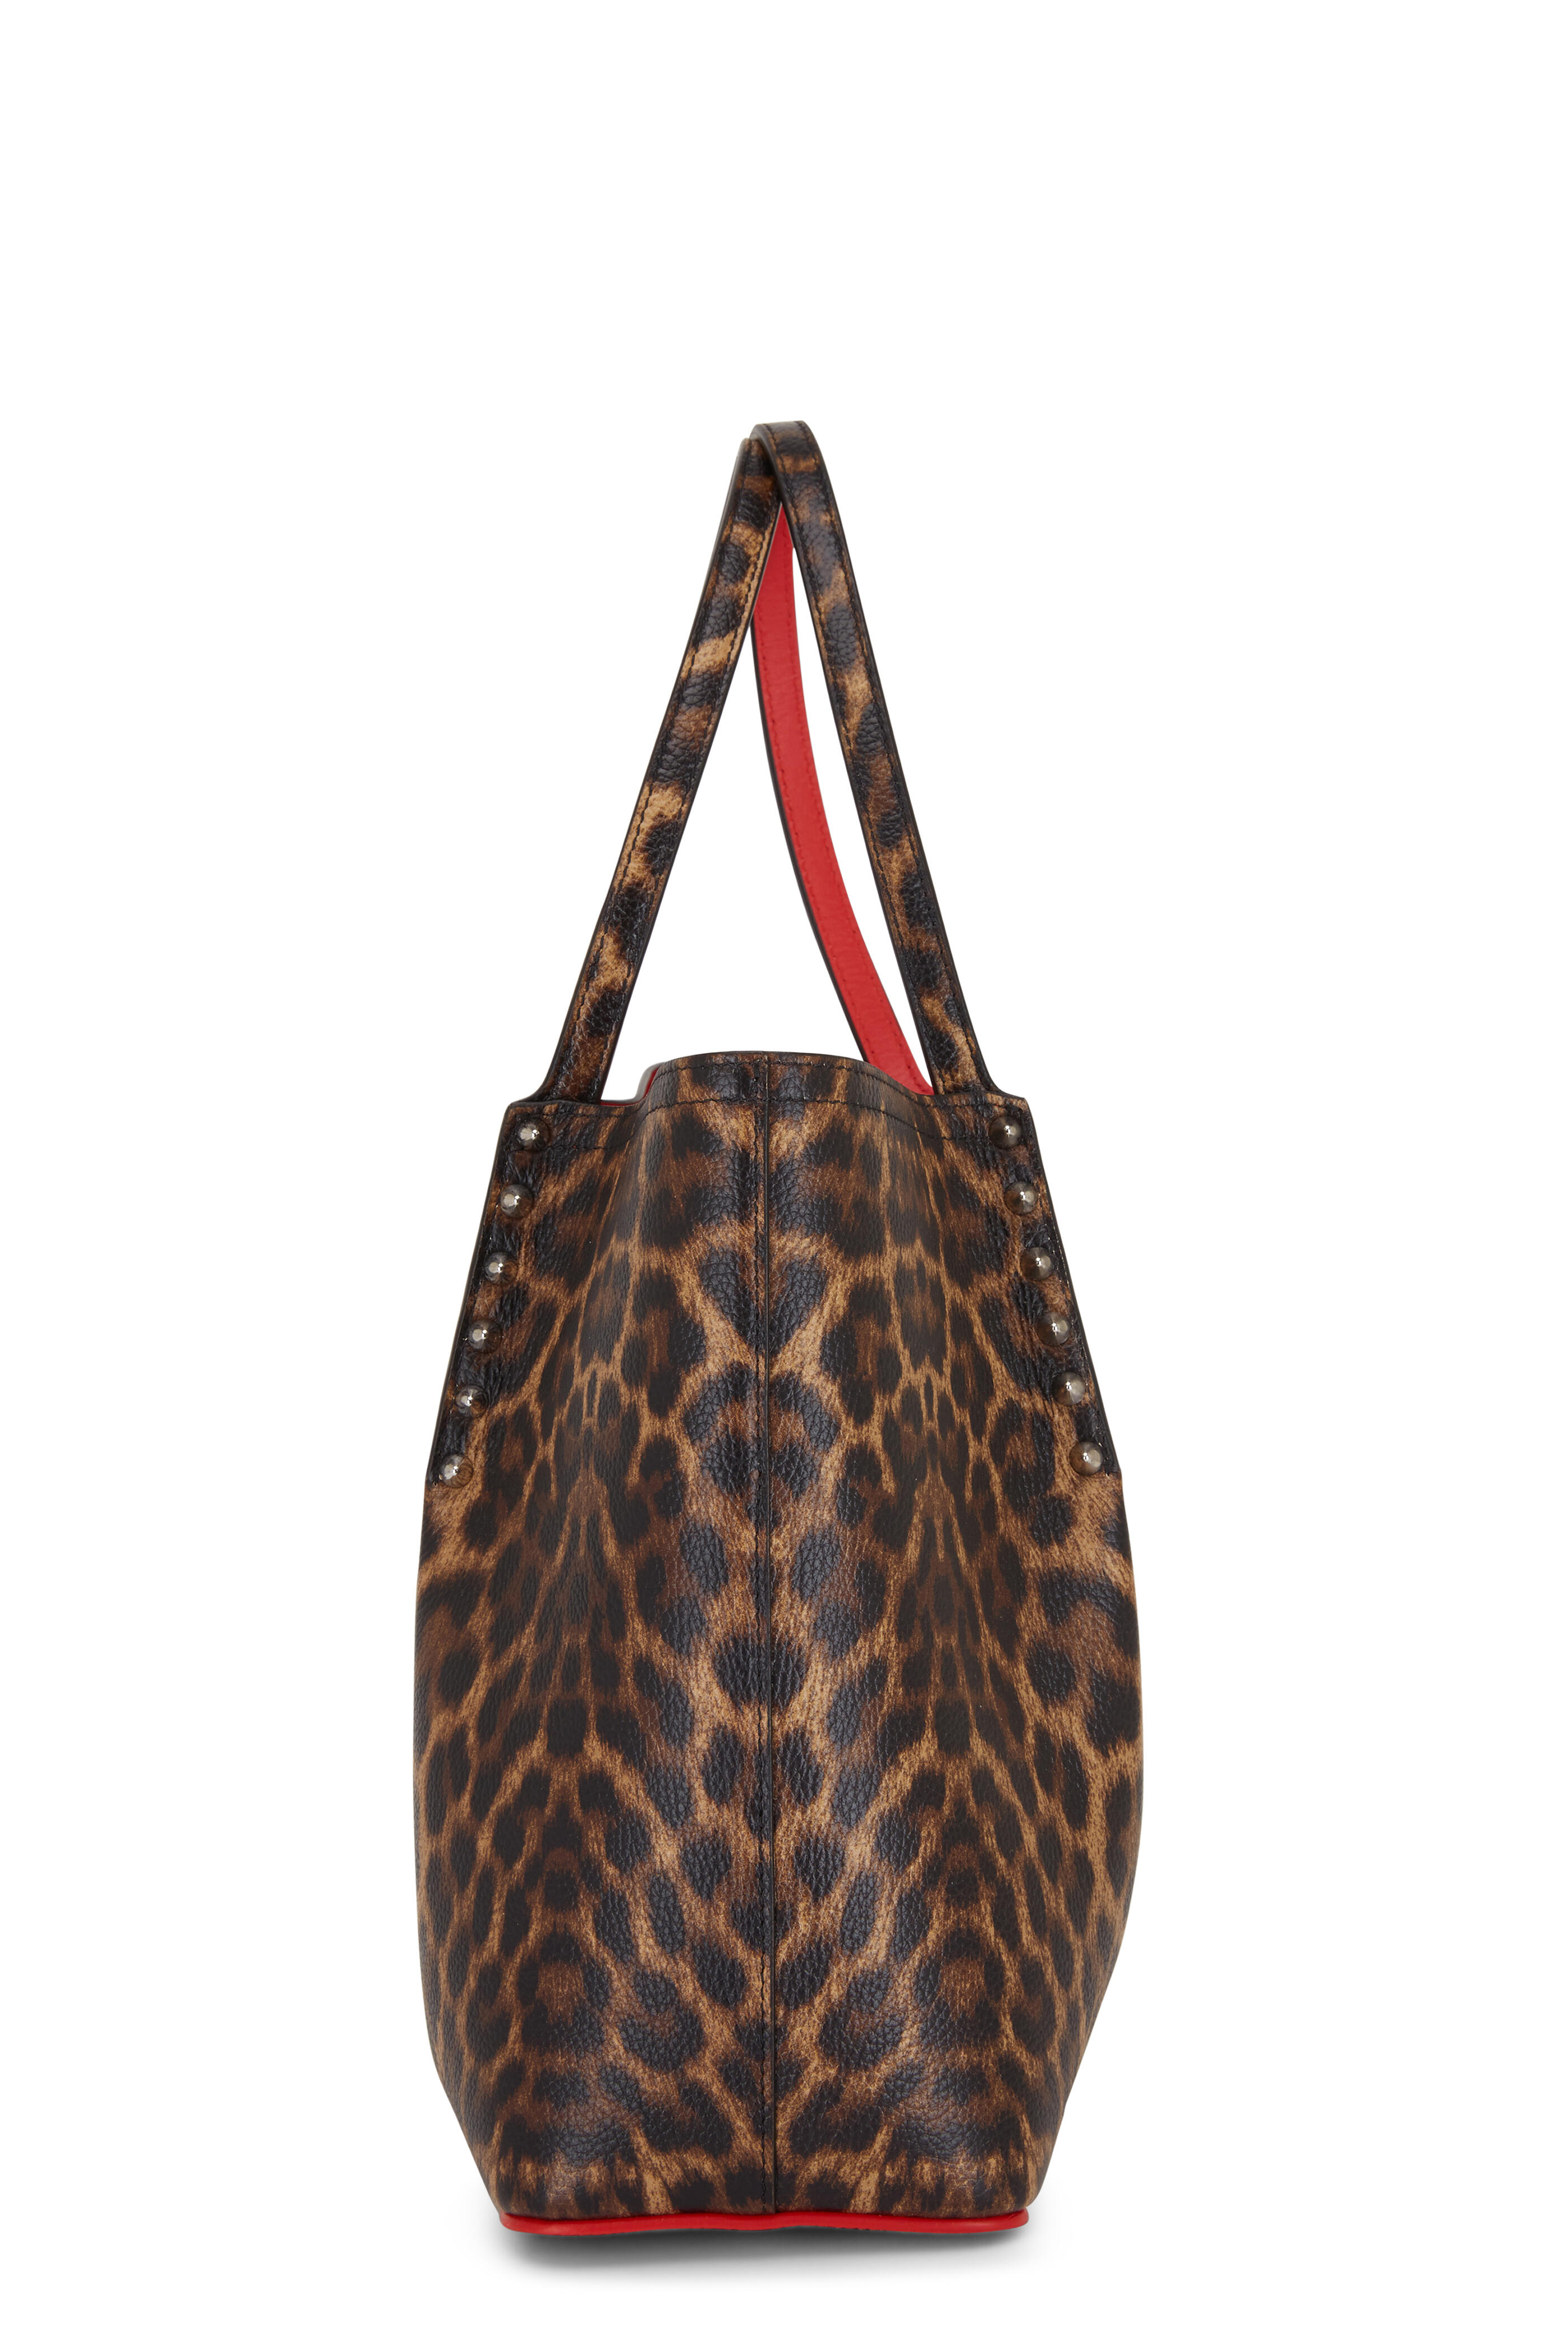 Christian Louboutin - Cabarock Leopard Leather Large Tote Bag